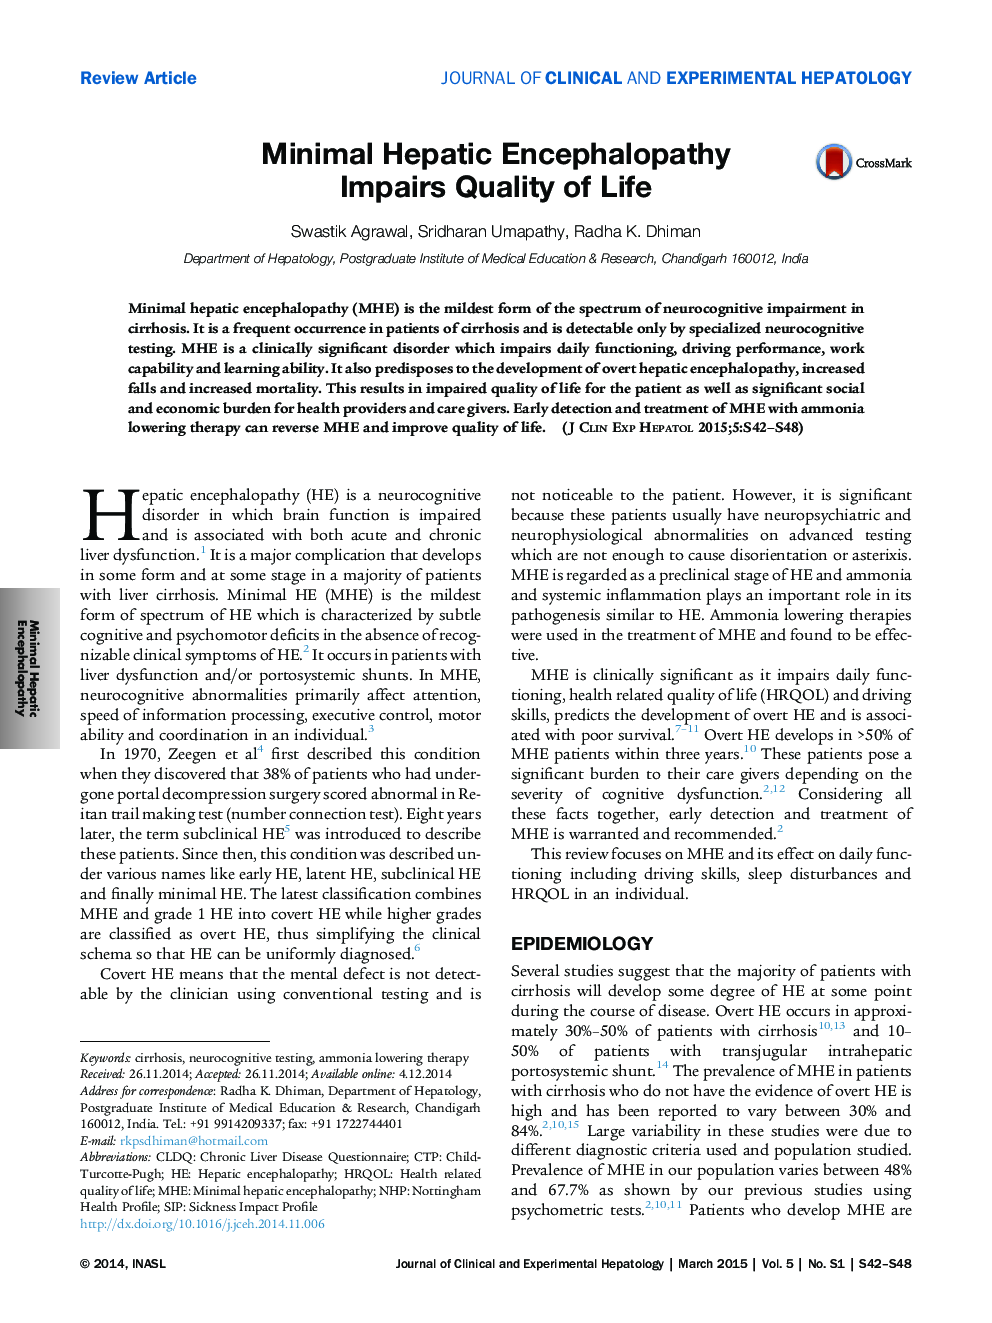 Minimal Hepatic Encephalopathy Impairs Quality of Life